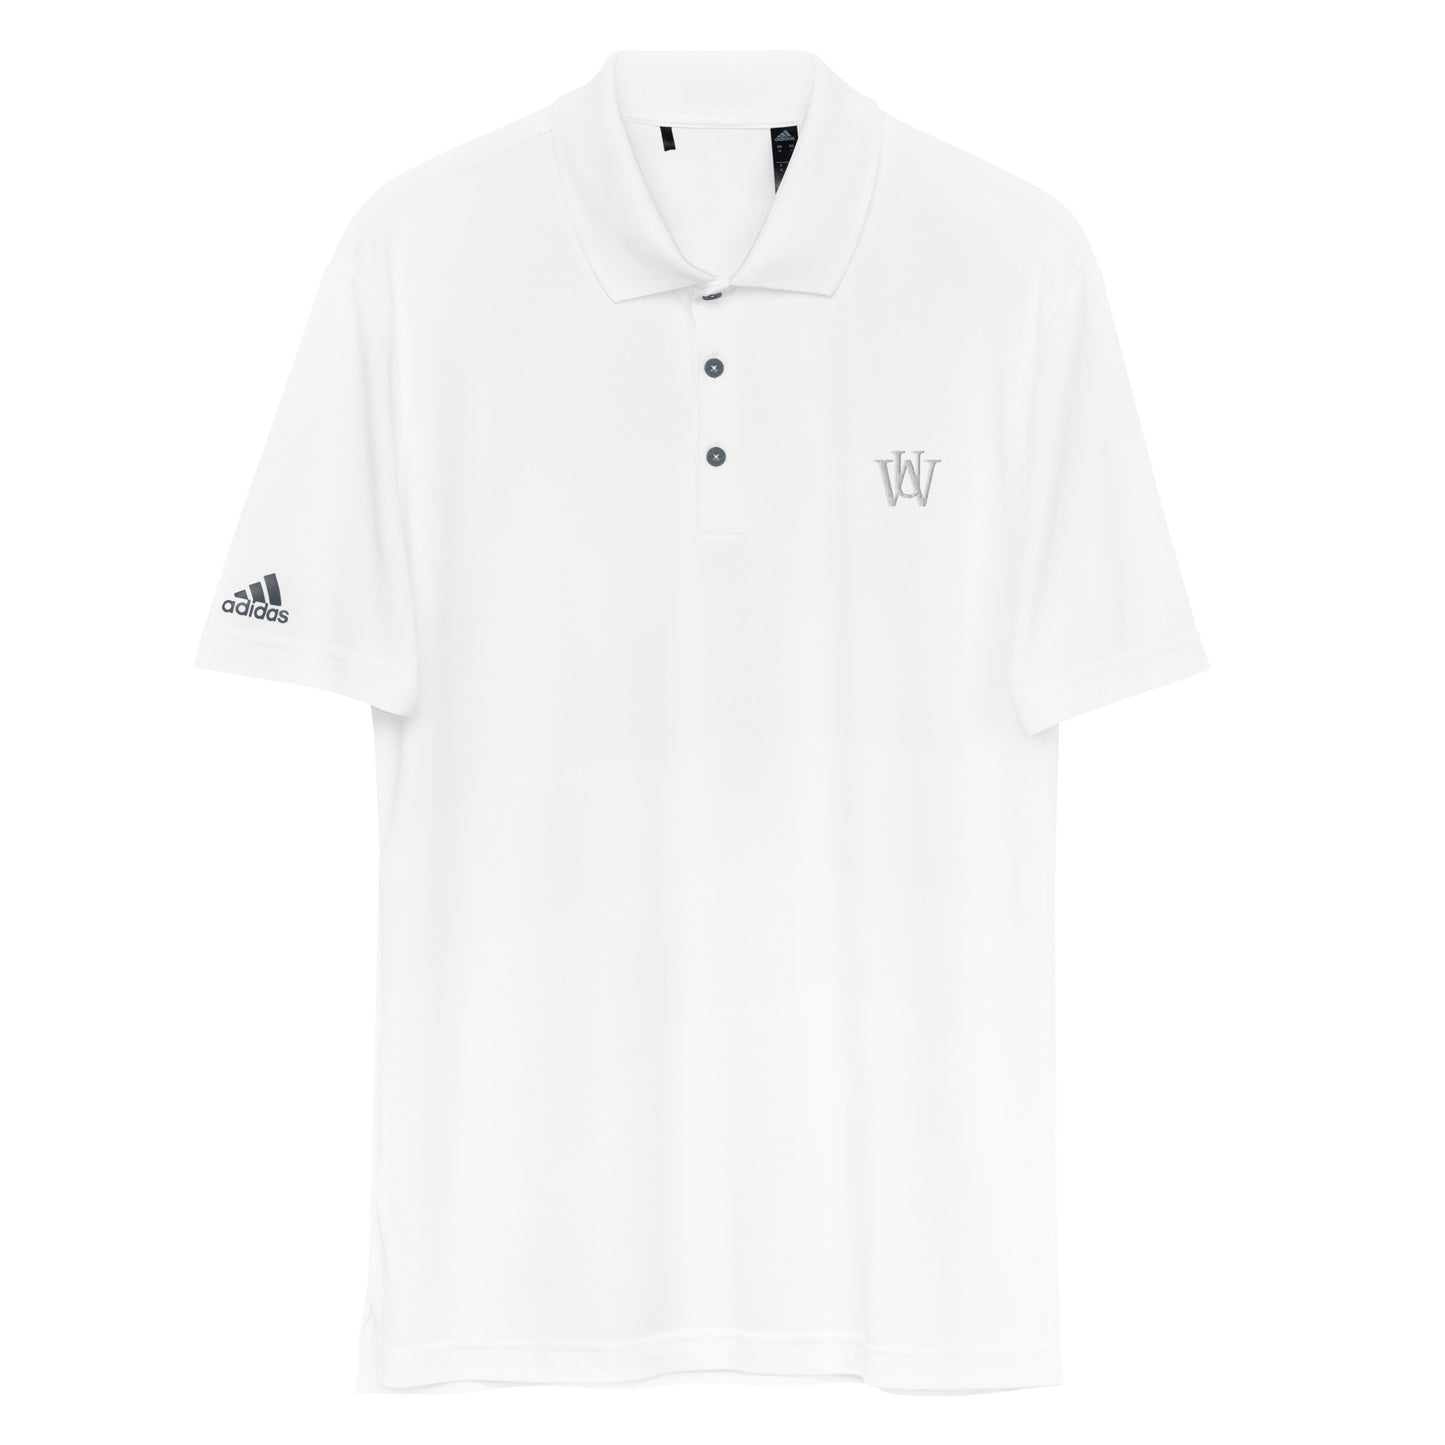 WAKE UP x Adidas Performance Golf Shirt